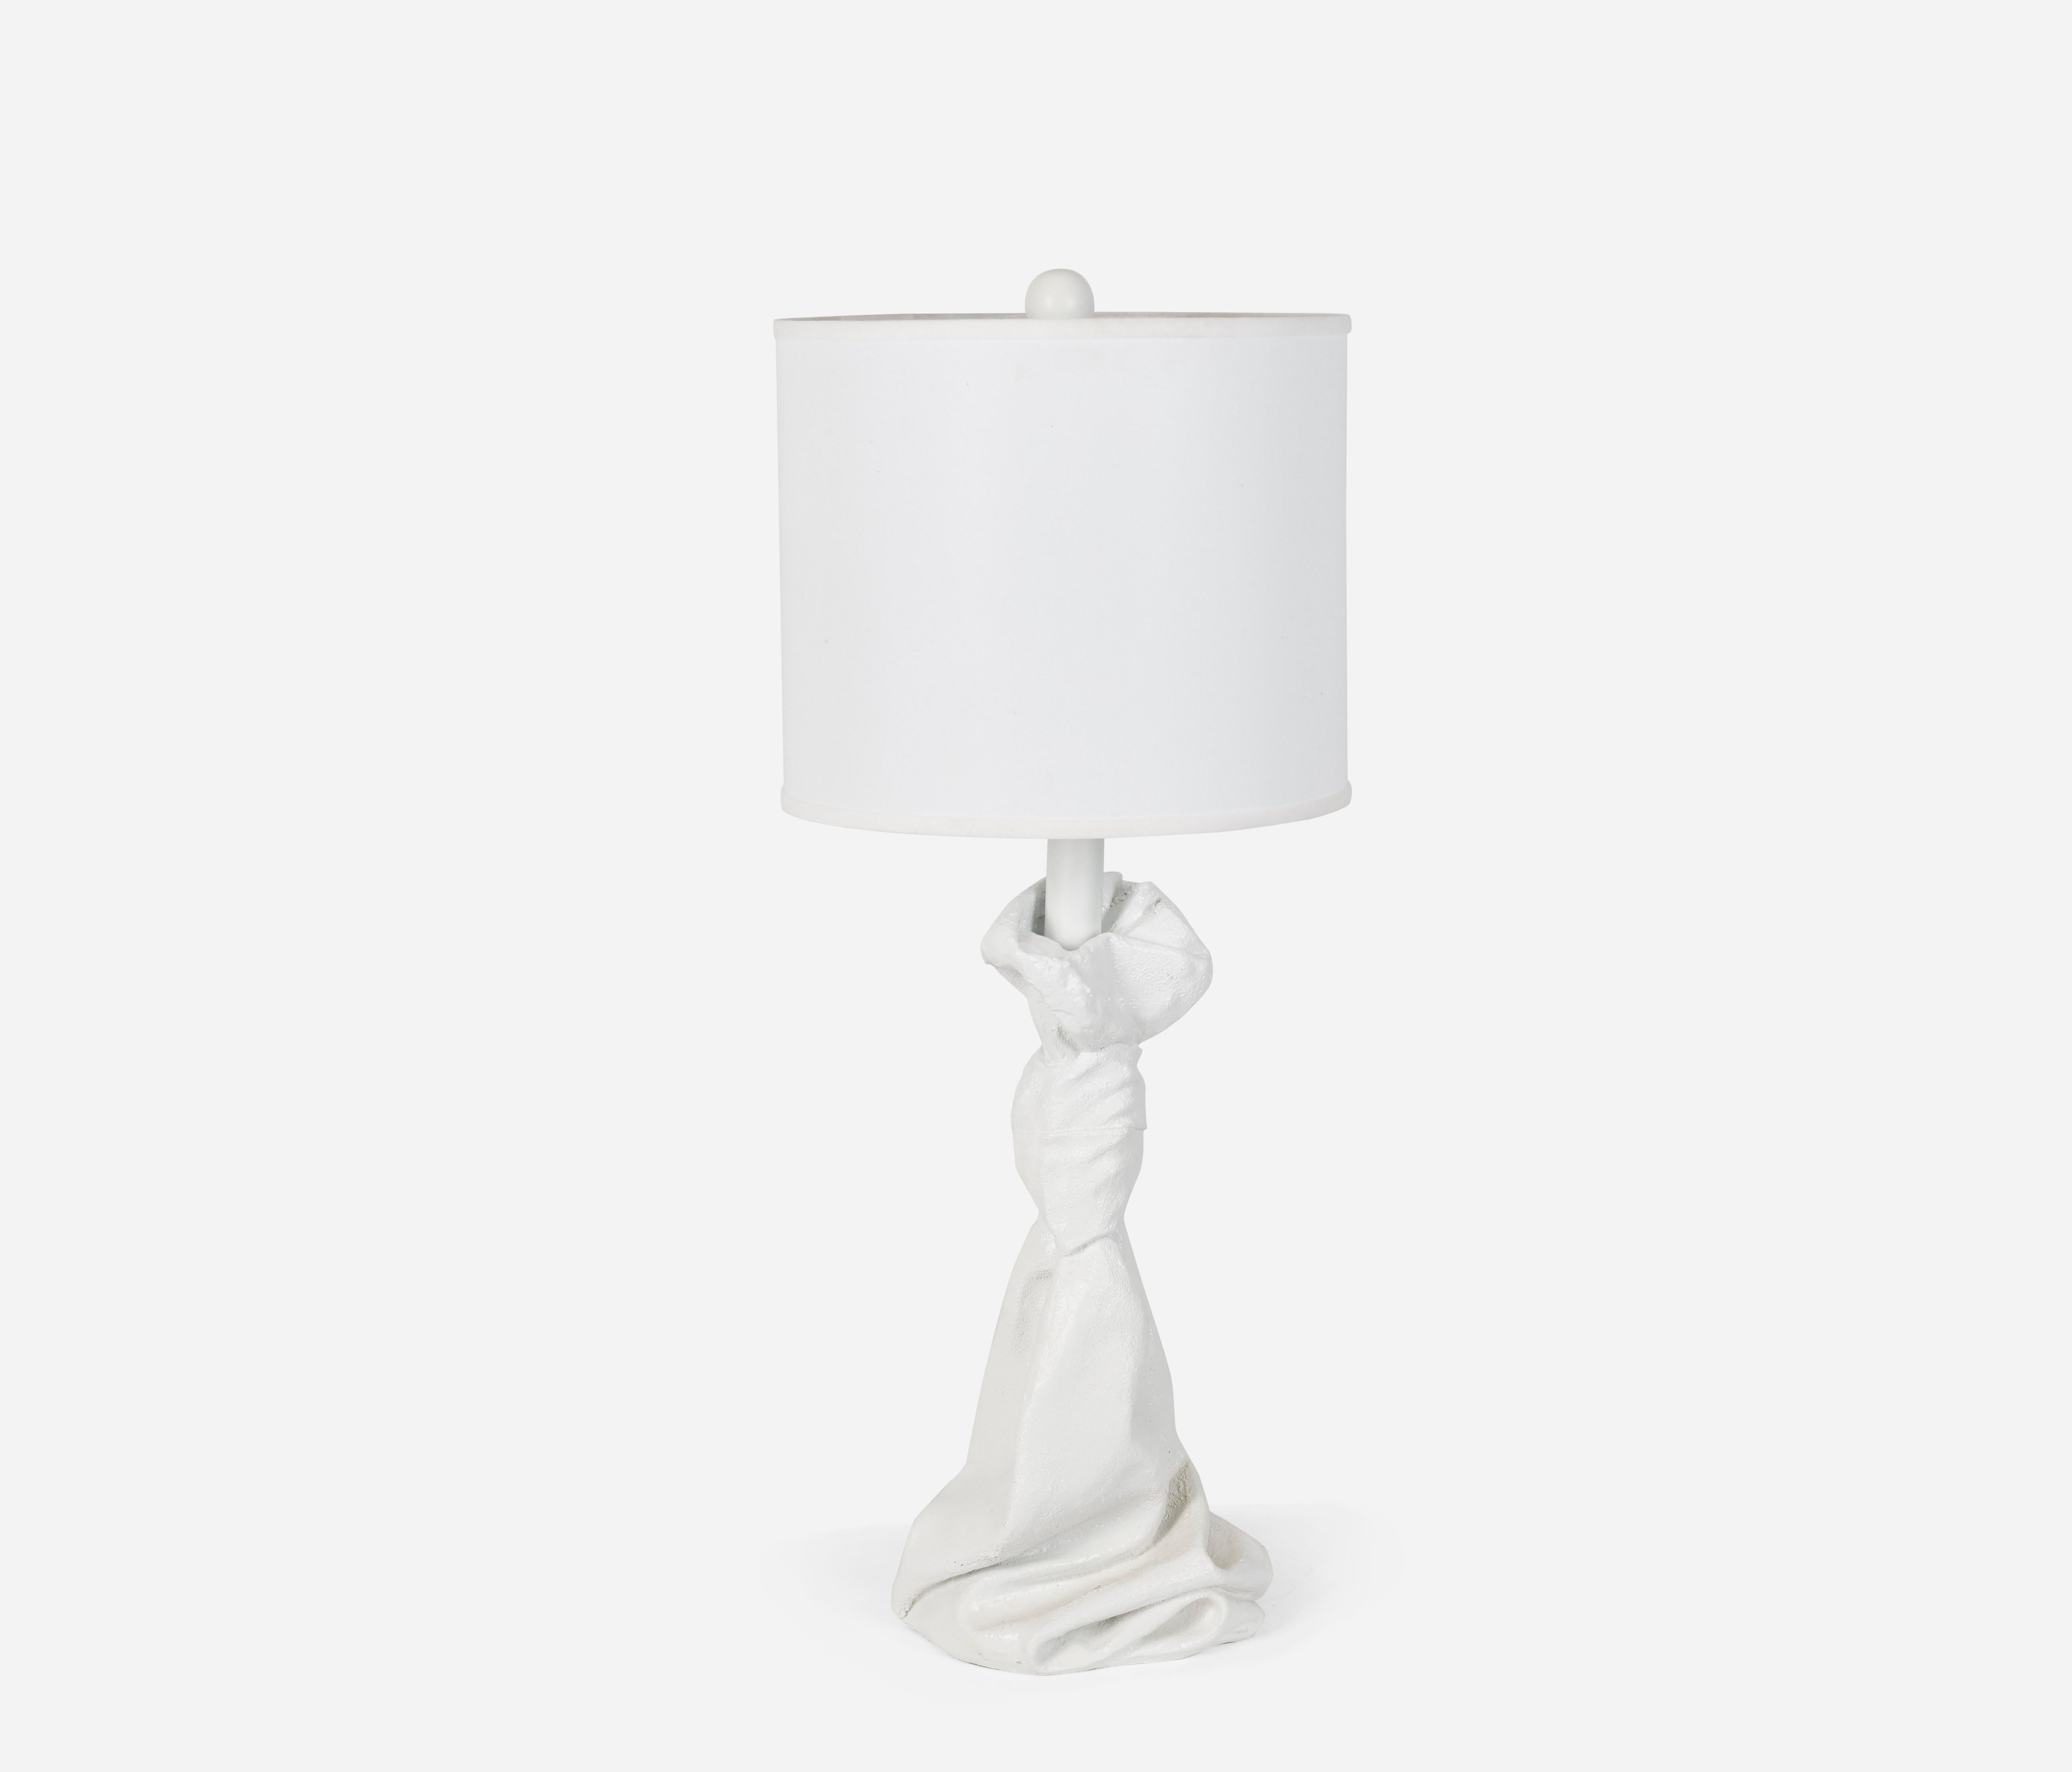 White plaster draped lamp, in the style of John Dickinson.